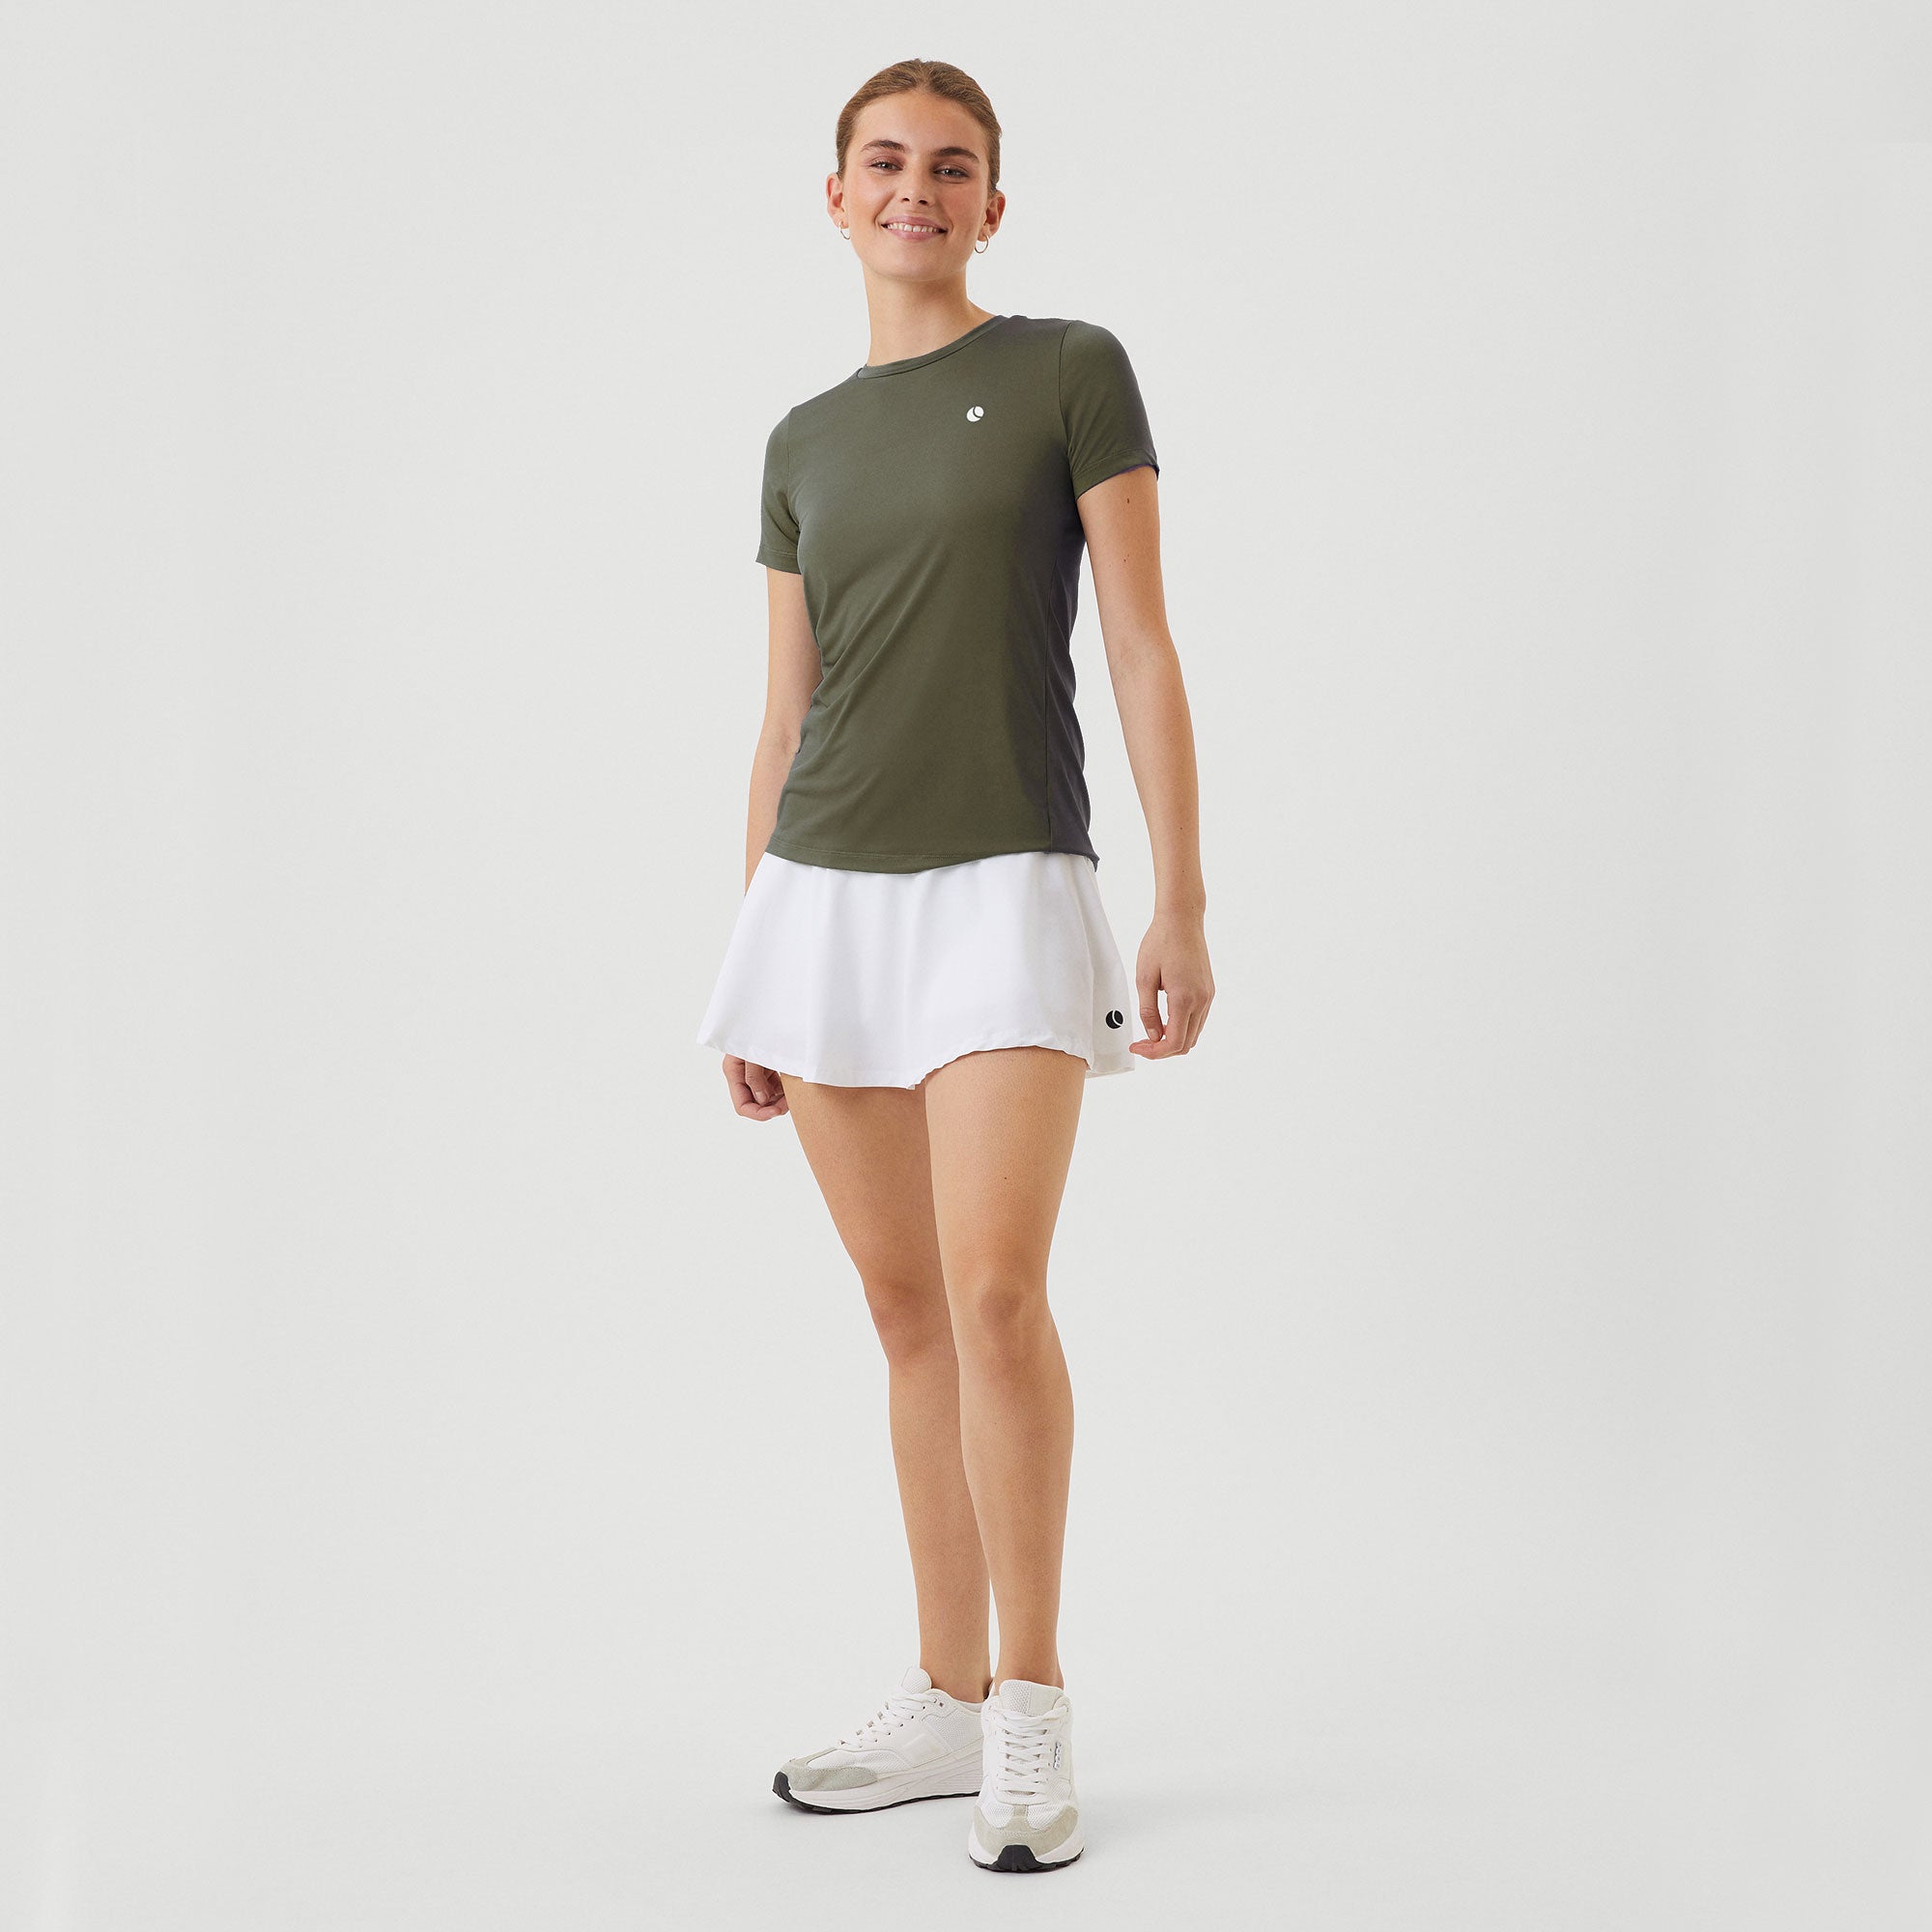 Björn Borg Ace Women's Slim Tennis Shirt - Green (3)